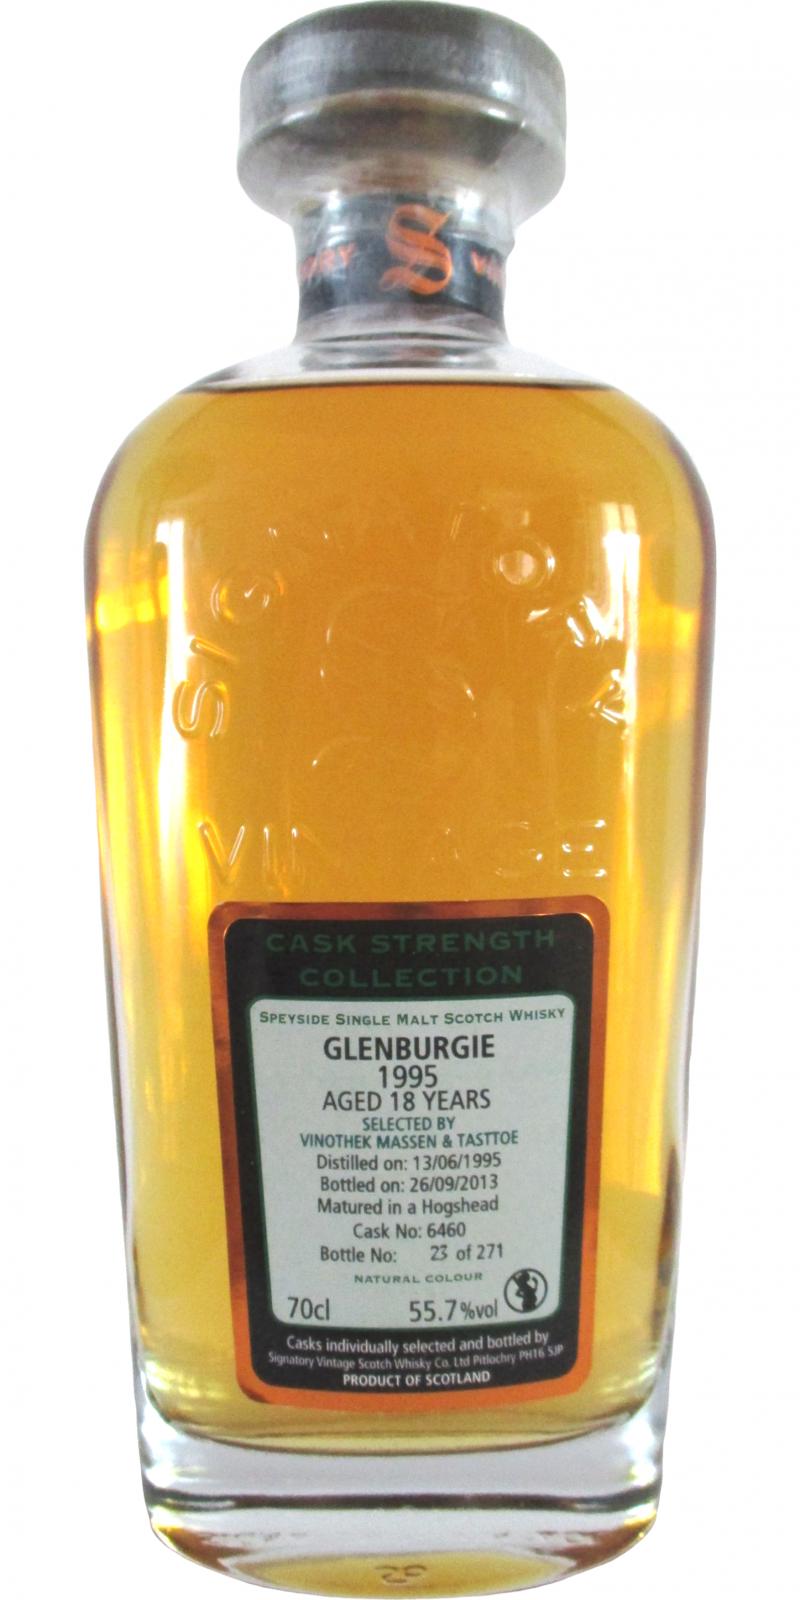 Glenburgie 1995 SV Cask Strength Collection #6460 Vinothek Massen & Tasttoe 55.7% 700ml